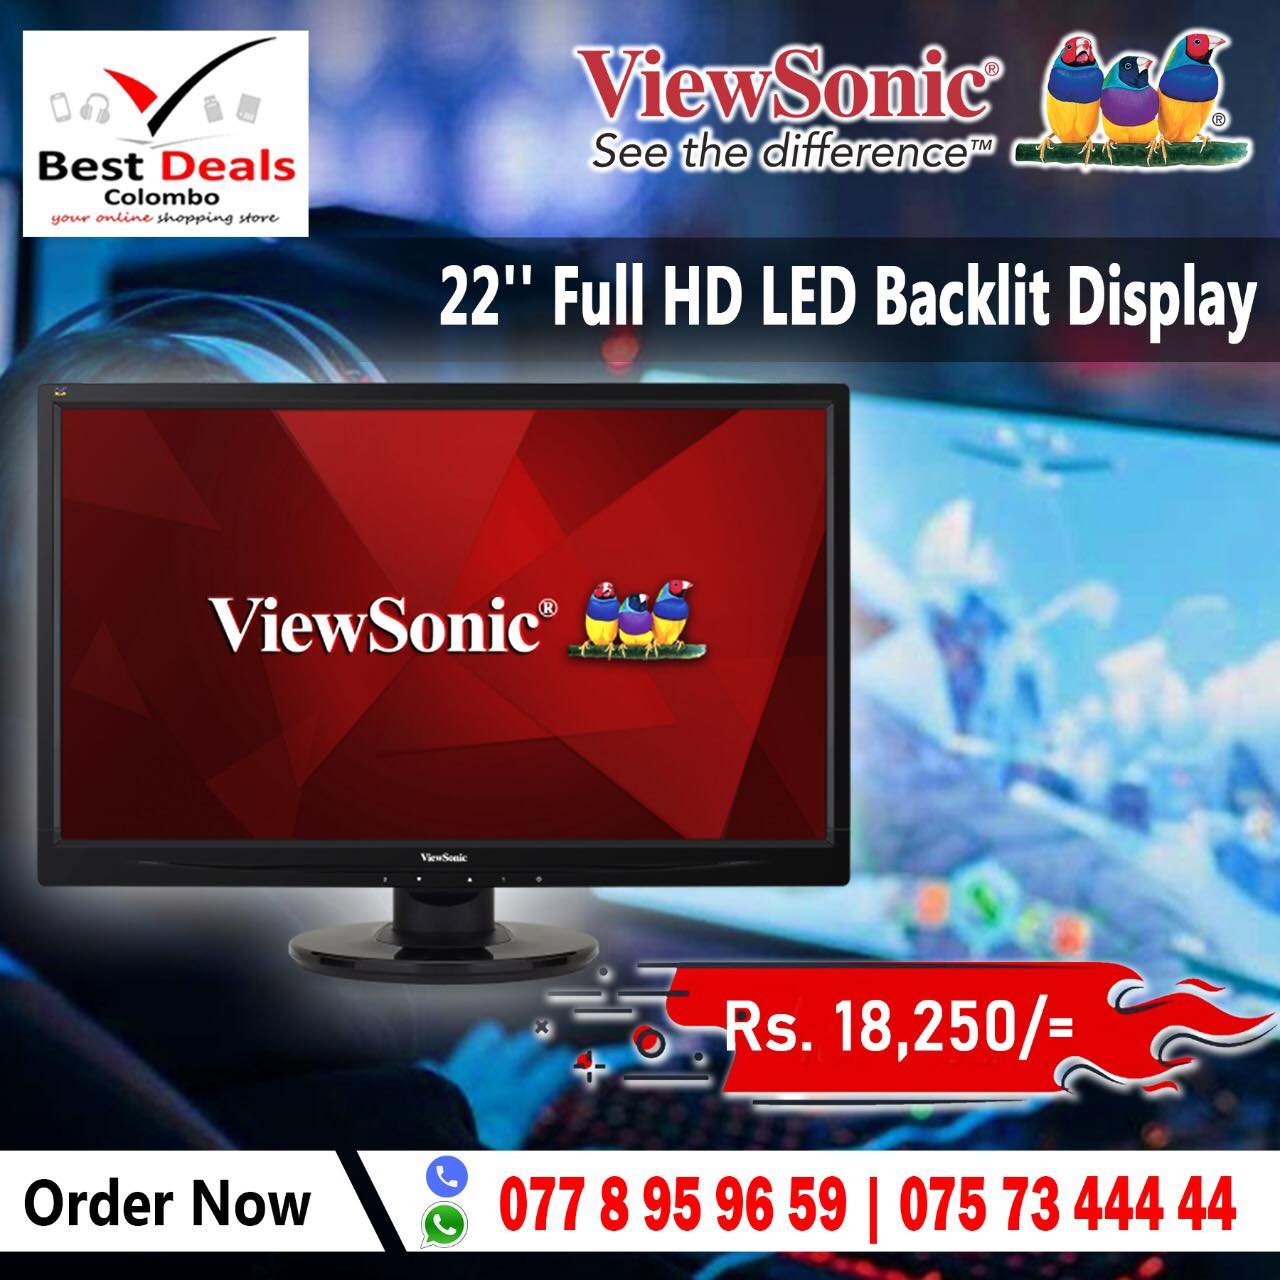 ViewSonic 22 Inch Full LED Backlit Display